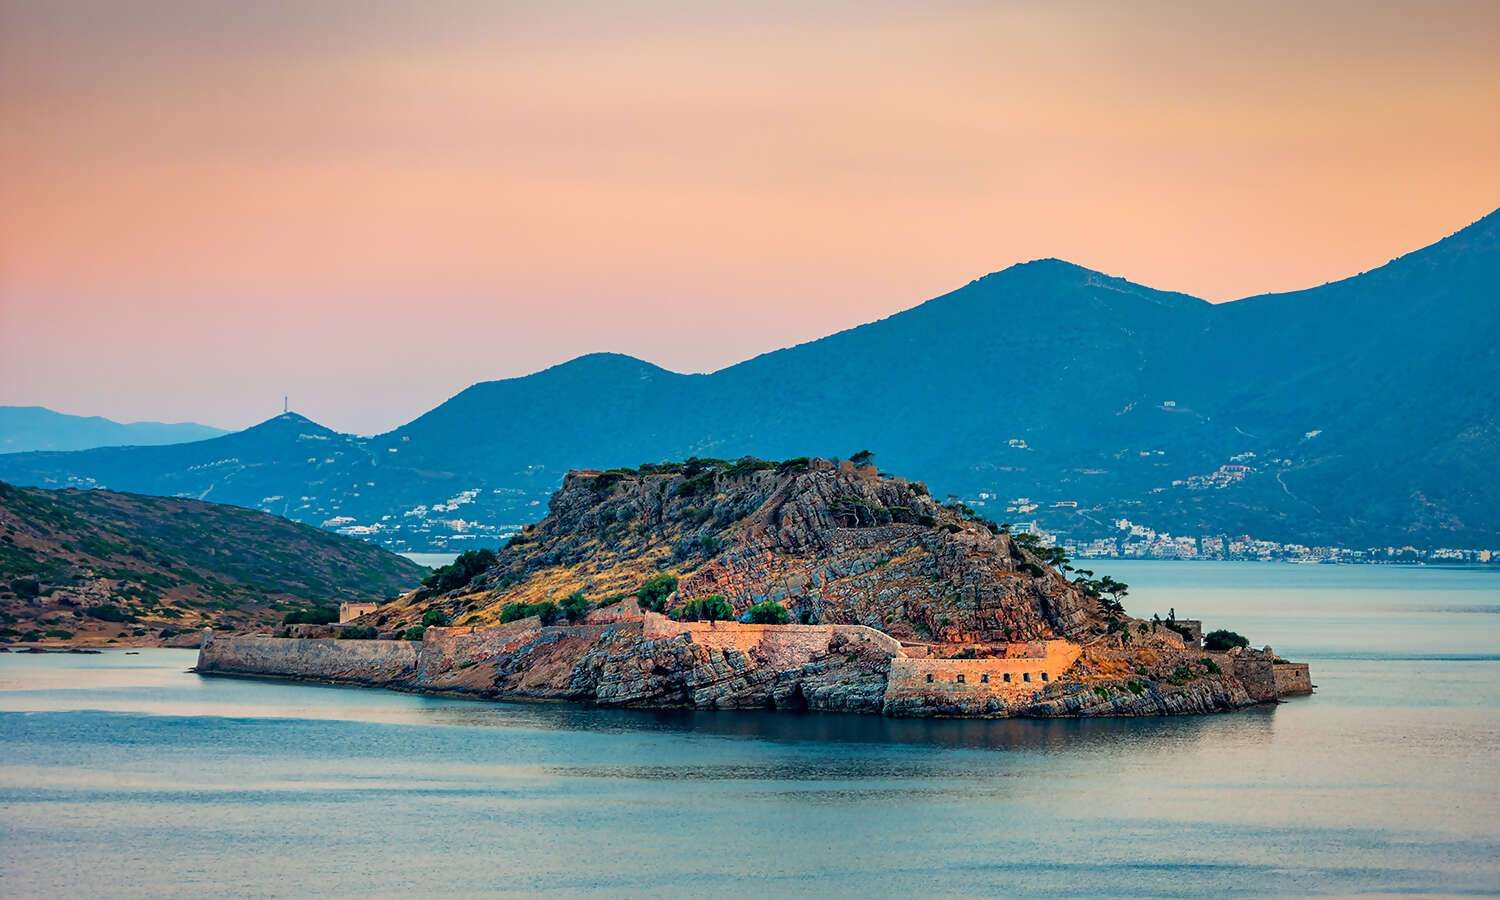  Ancient Wonders & Wellness in Crete